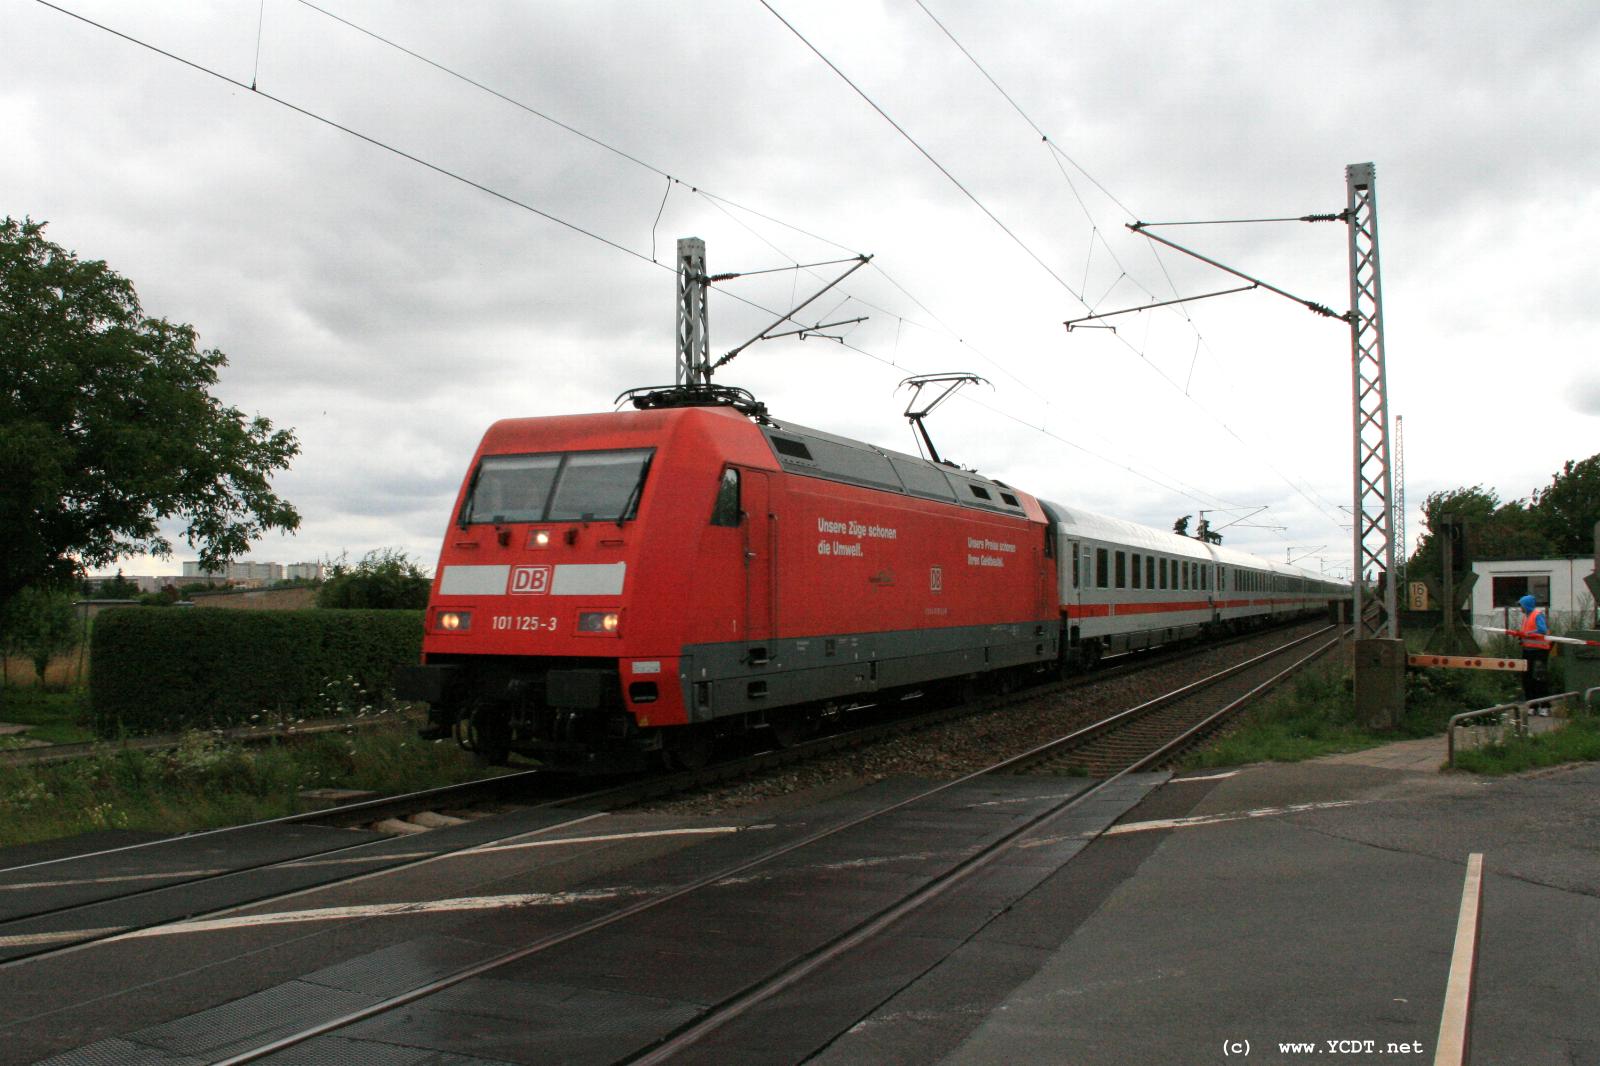  16:14   101 125-3 mit IC Richtung Magdeburg 